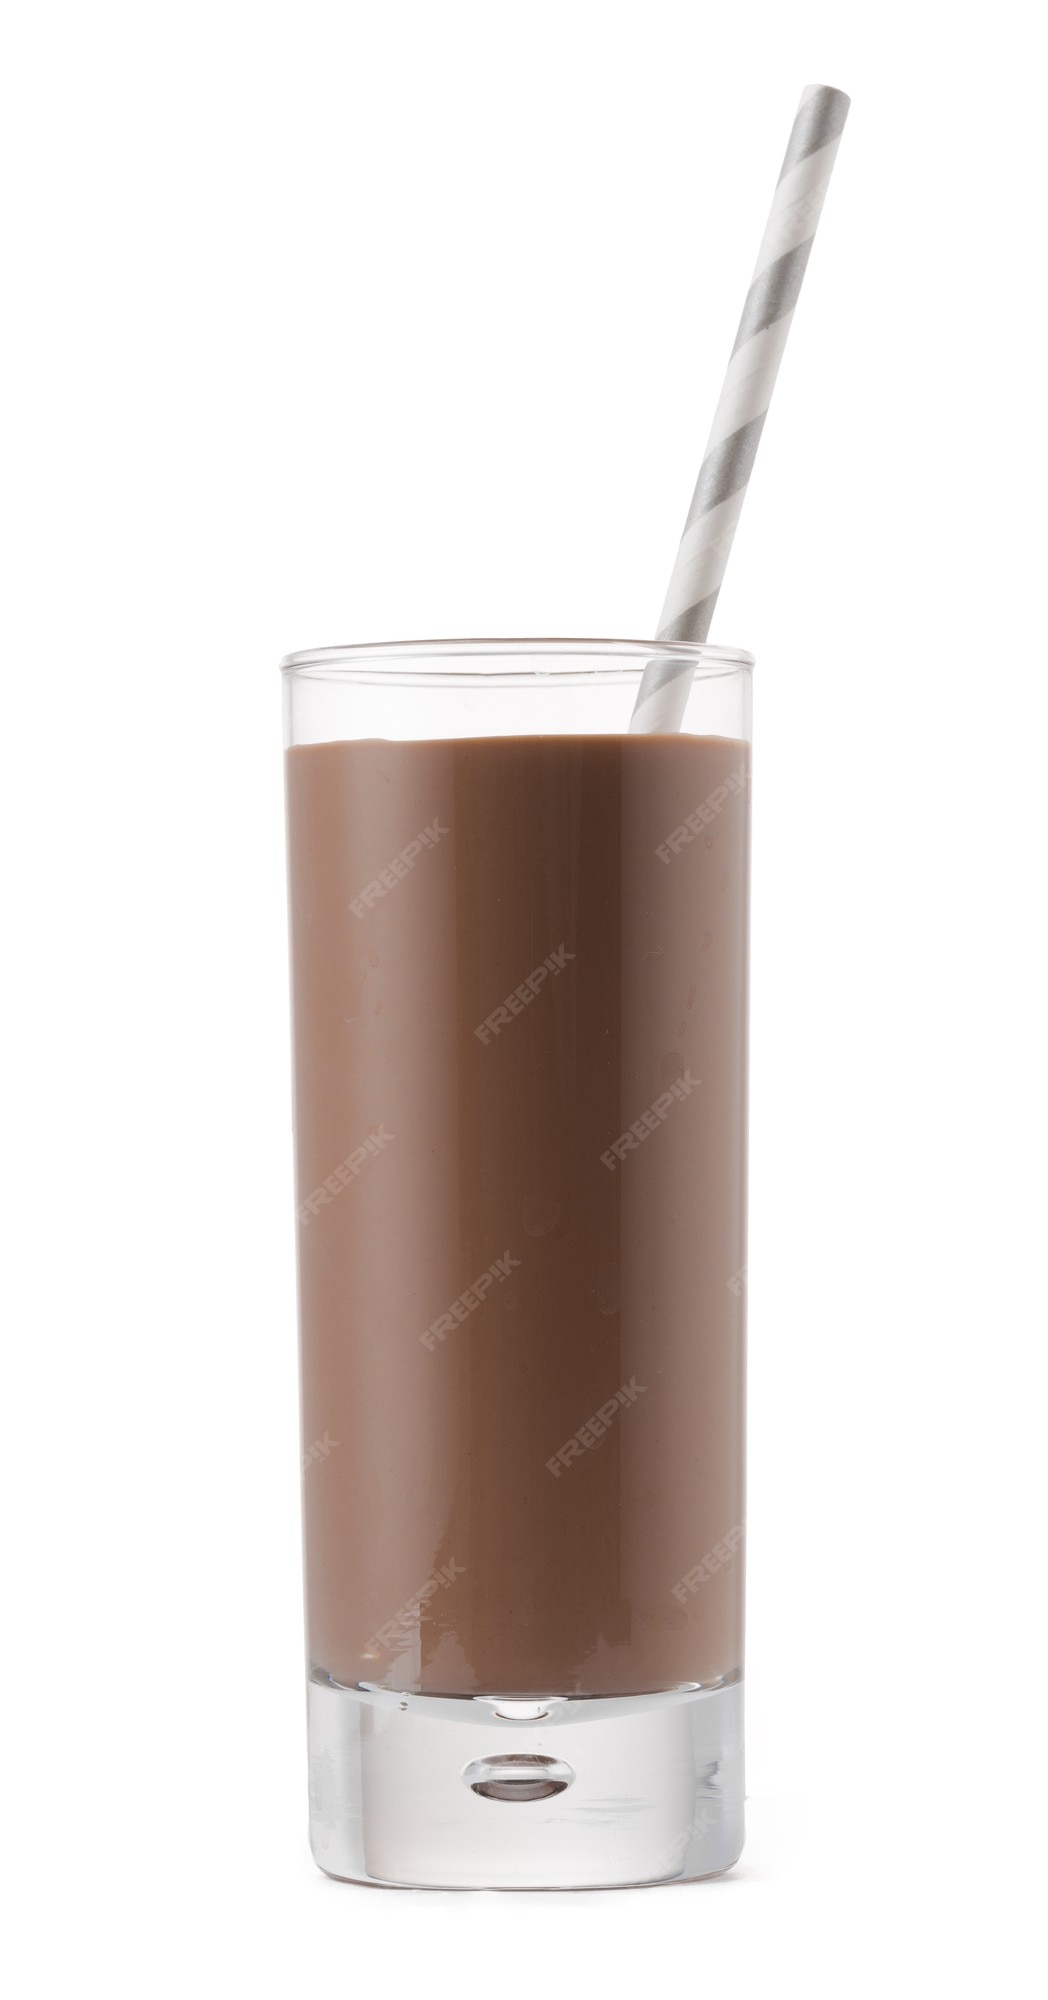 https://img.freepik.com/premium-photo/glass-cup-chocolate-milk-with-straw-isolated-white-background_93675-93744.jpg?w=2000